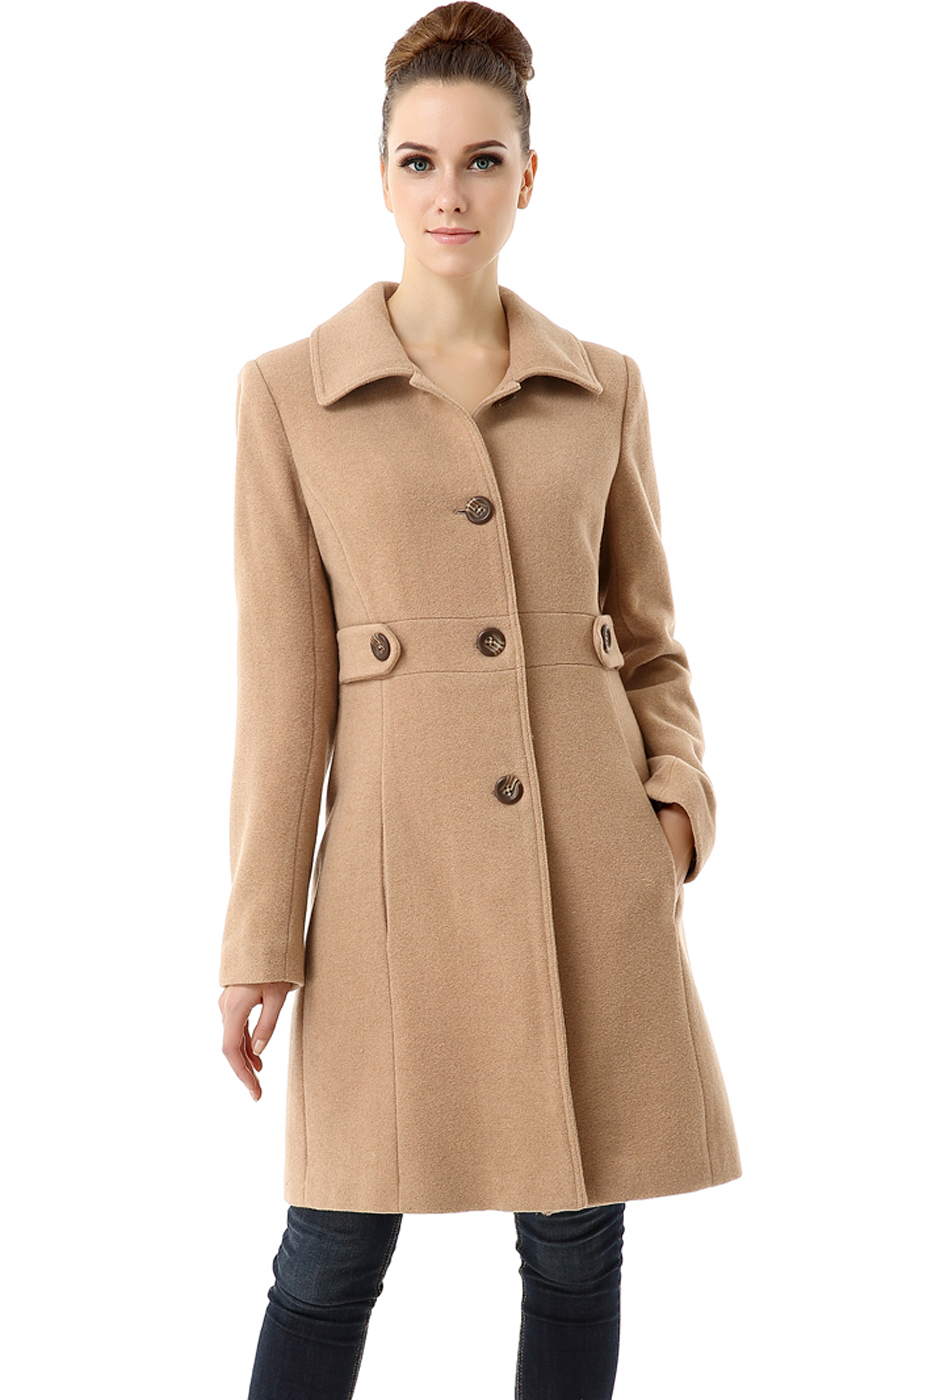 BGSD Womens Kim Wool Walking Coat Regular /& Plus Size /& Petite